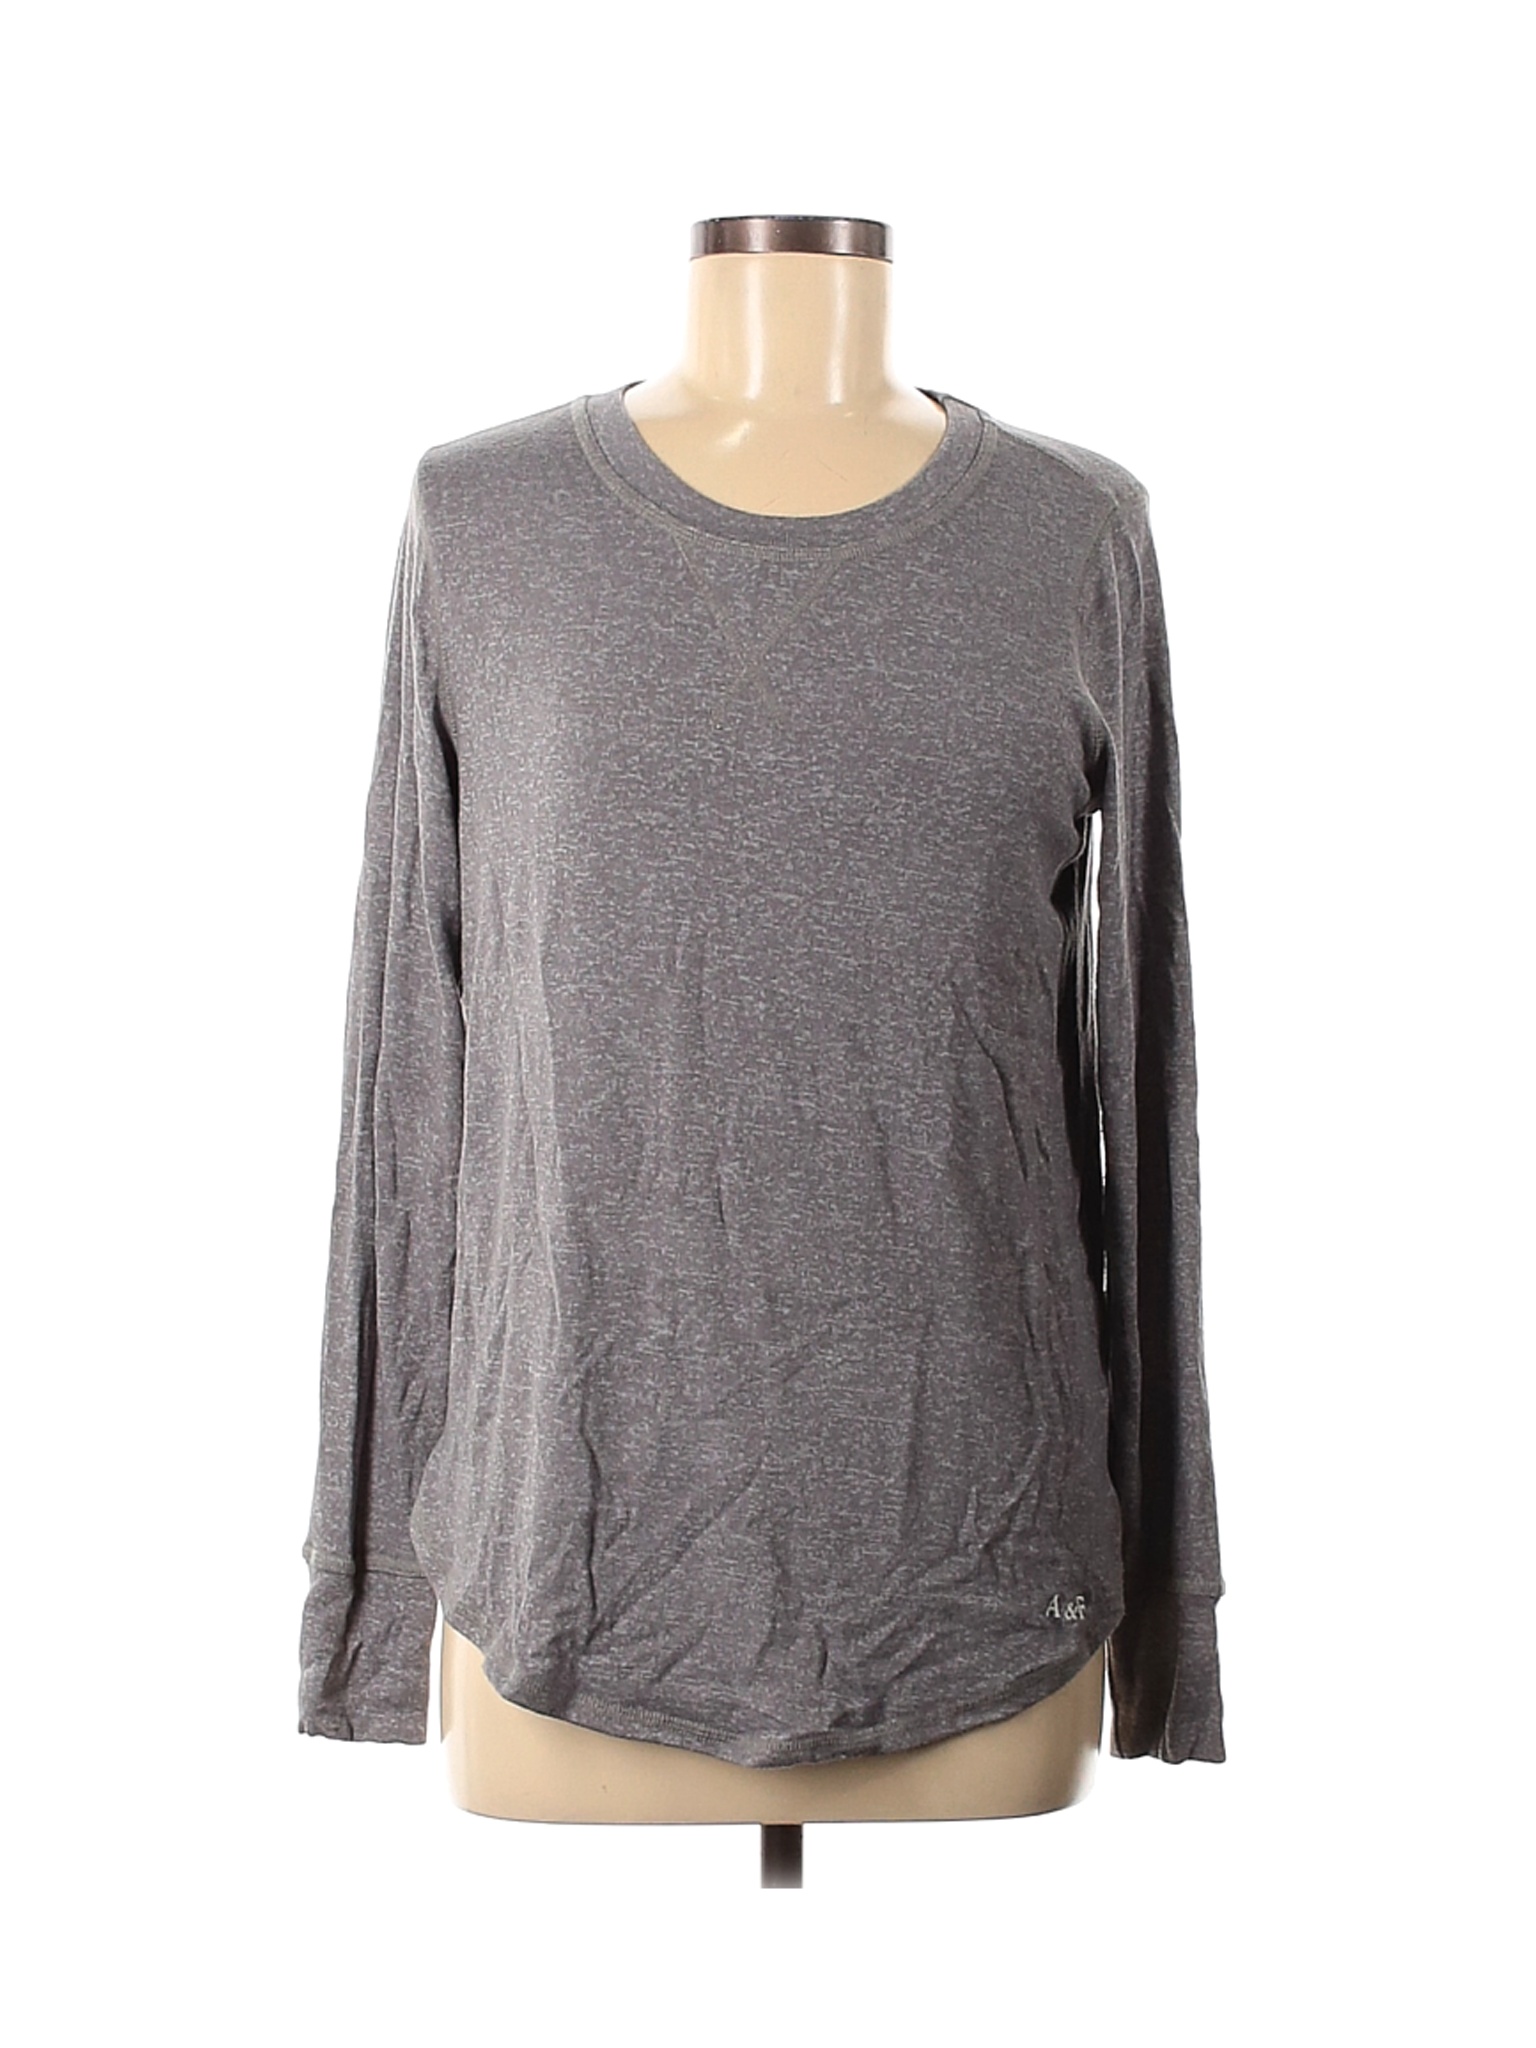 Abercrombie & Fitch Women Gray Long Sleeve T-Shirt M | eBay